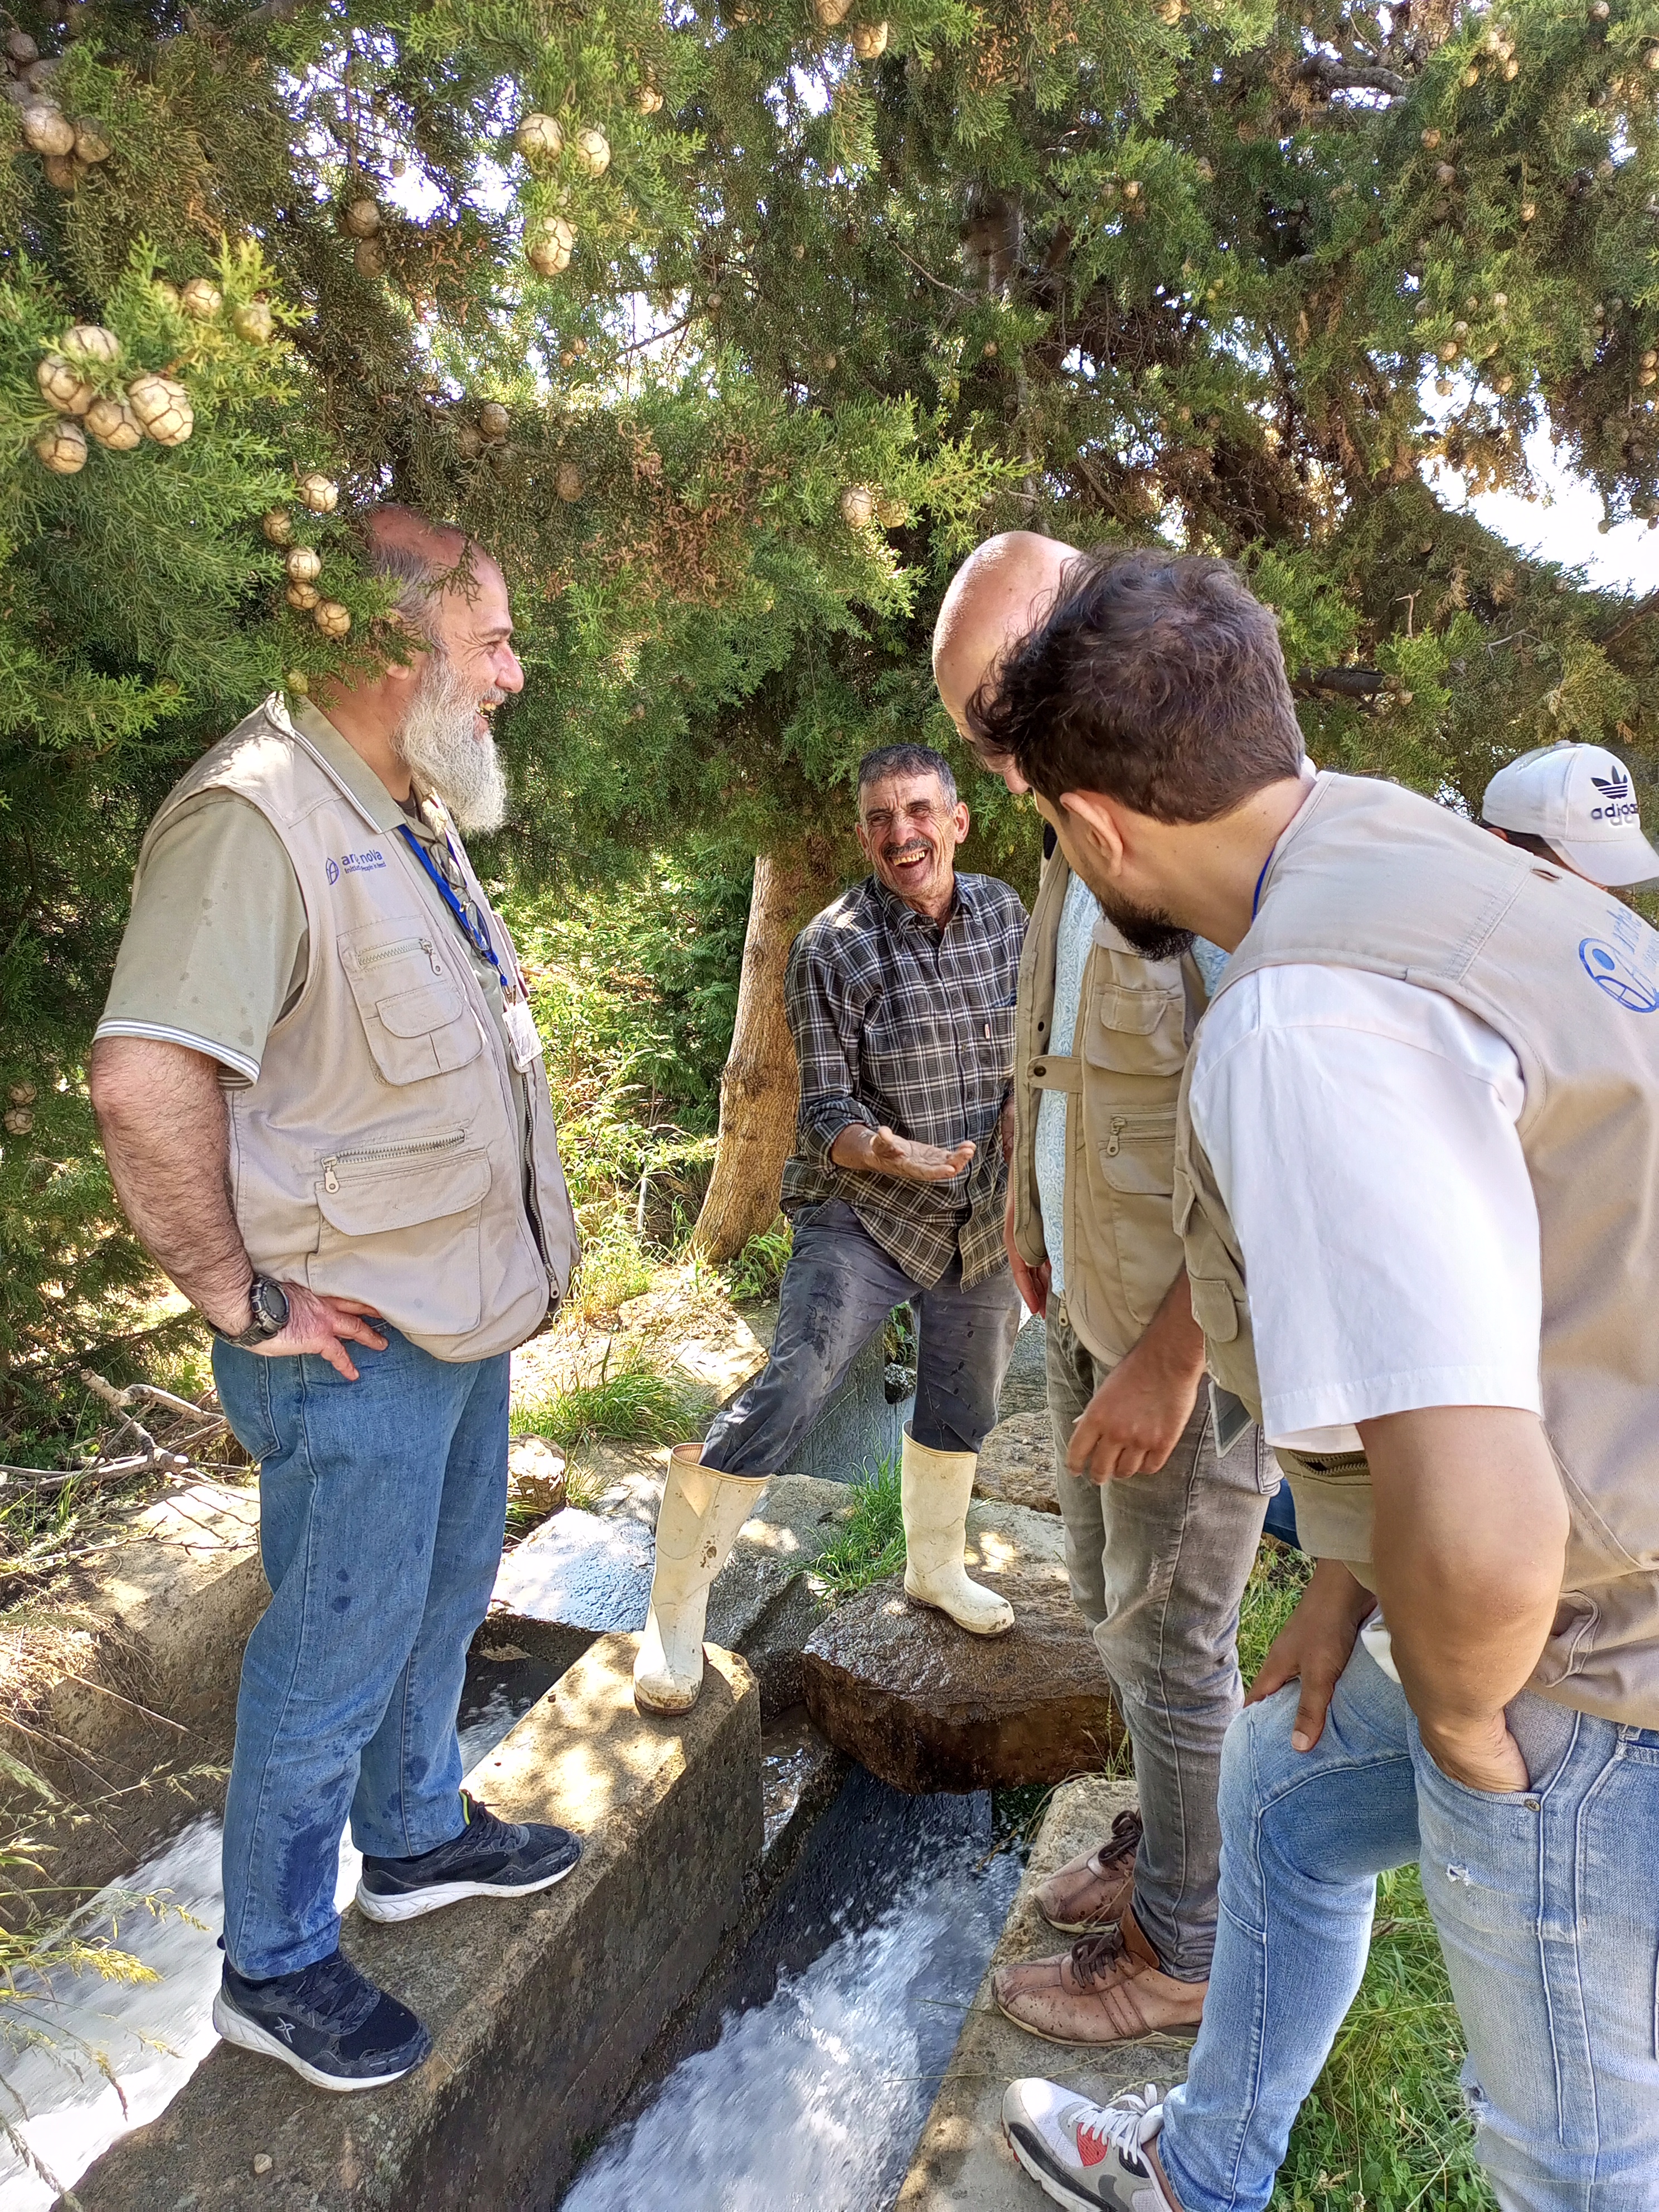 Vier Männer an einem Bewässerungskanal, einer blickt lachend Richtung Kamera